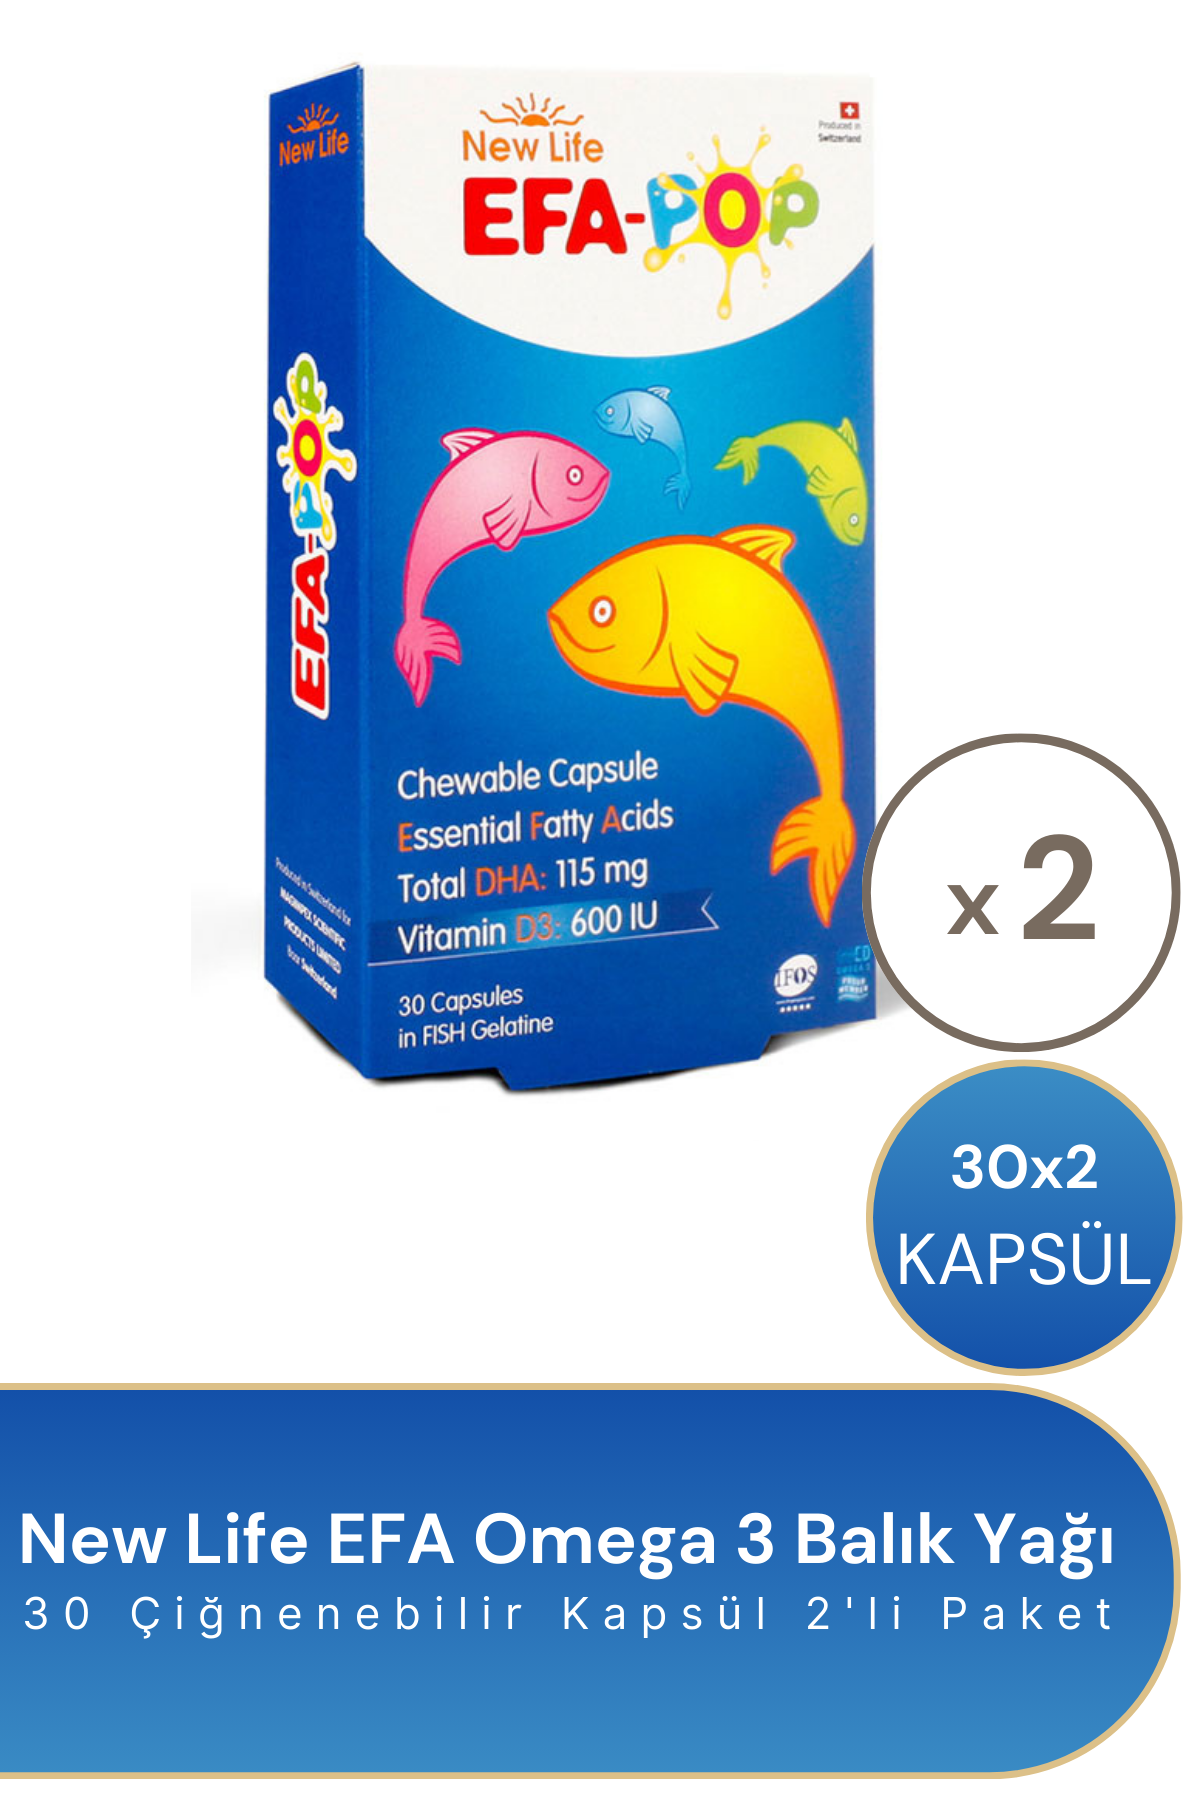 New Life EFA Pop Omega 3 Balık Yağı 30 Çiğnenebilir Kapsül 2'li Paket